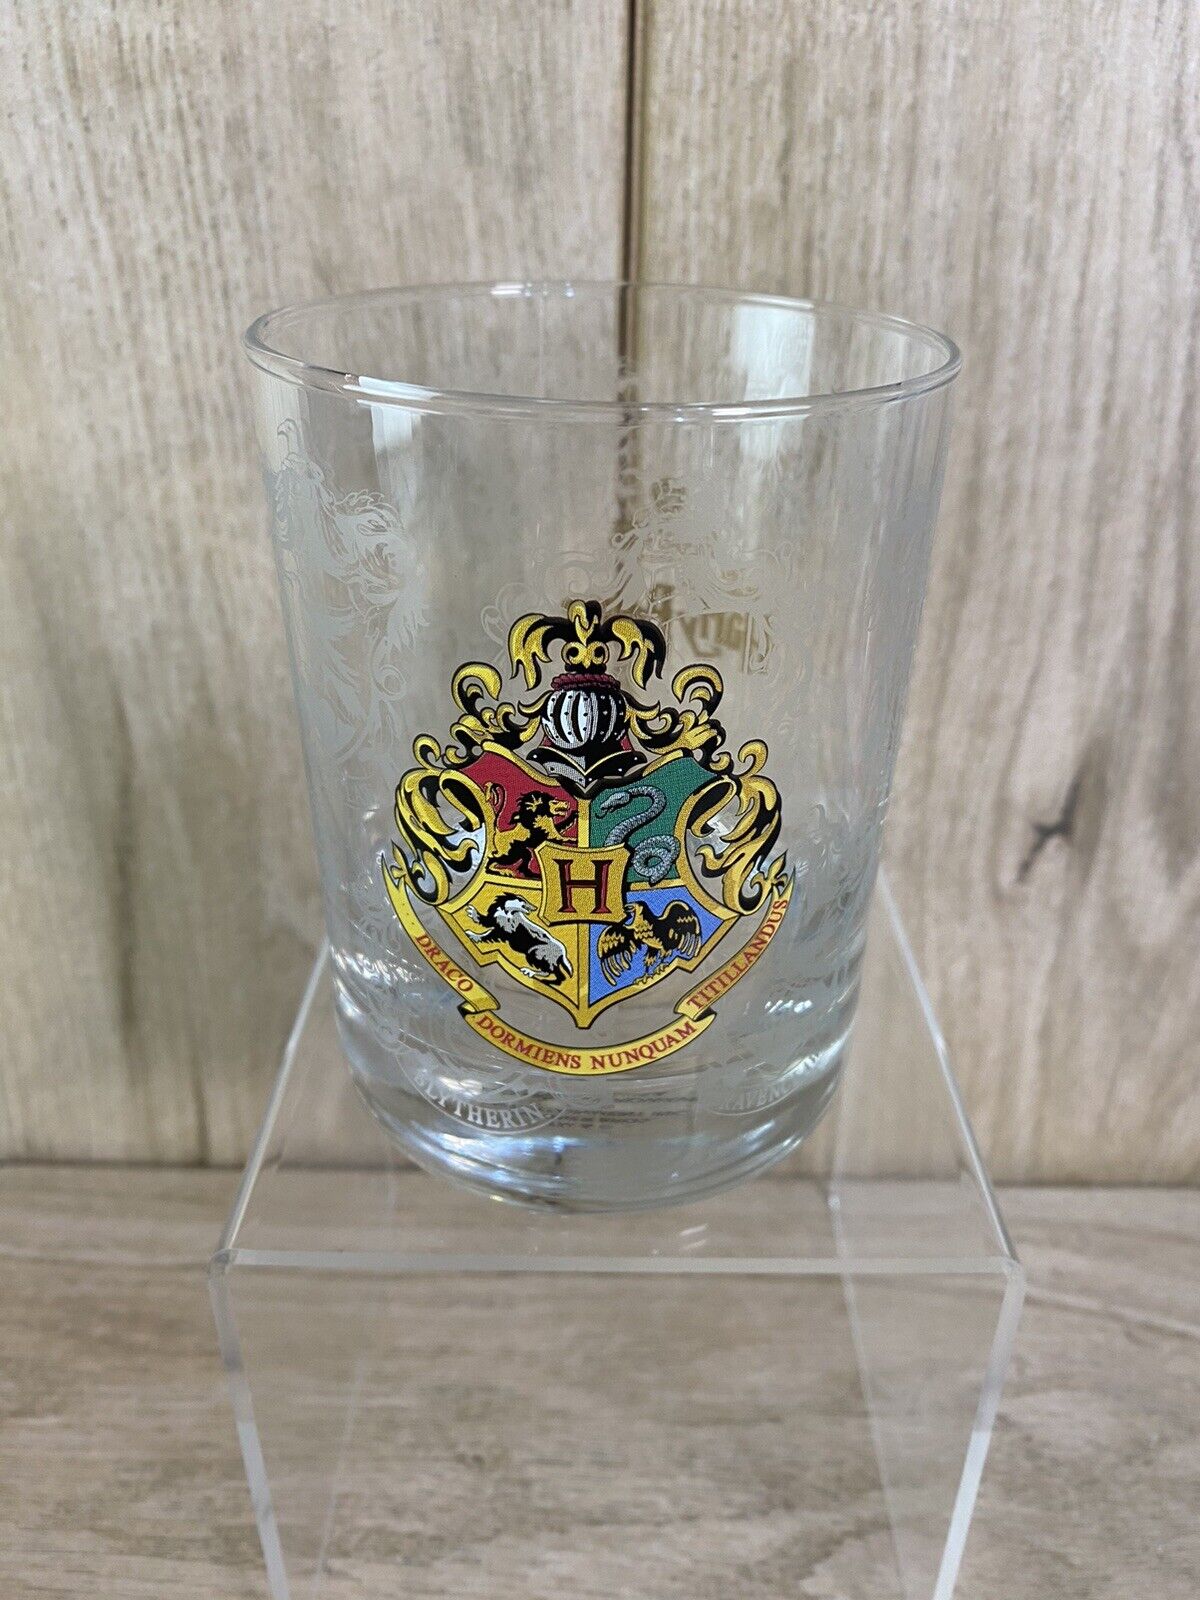 Harry Potter 10cm Glass Tumbler Hogwarts Crest - Warners Bros Studio London Tour